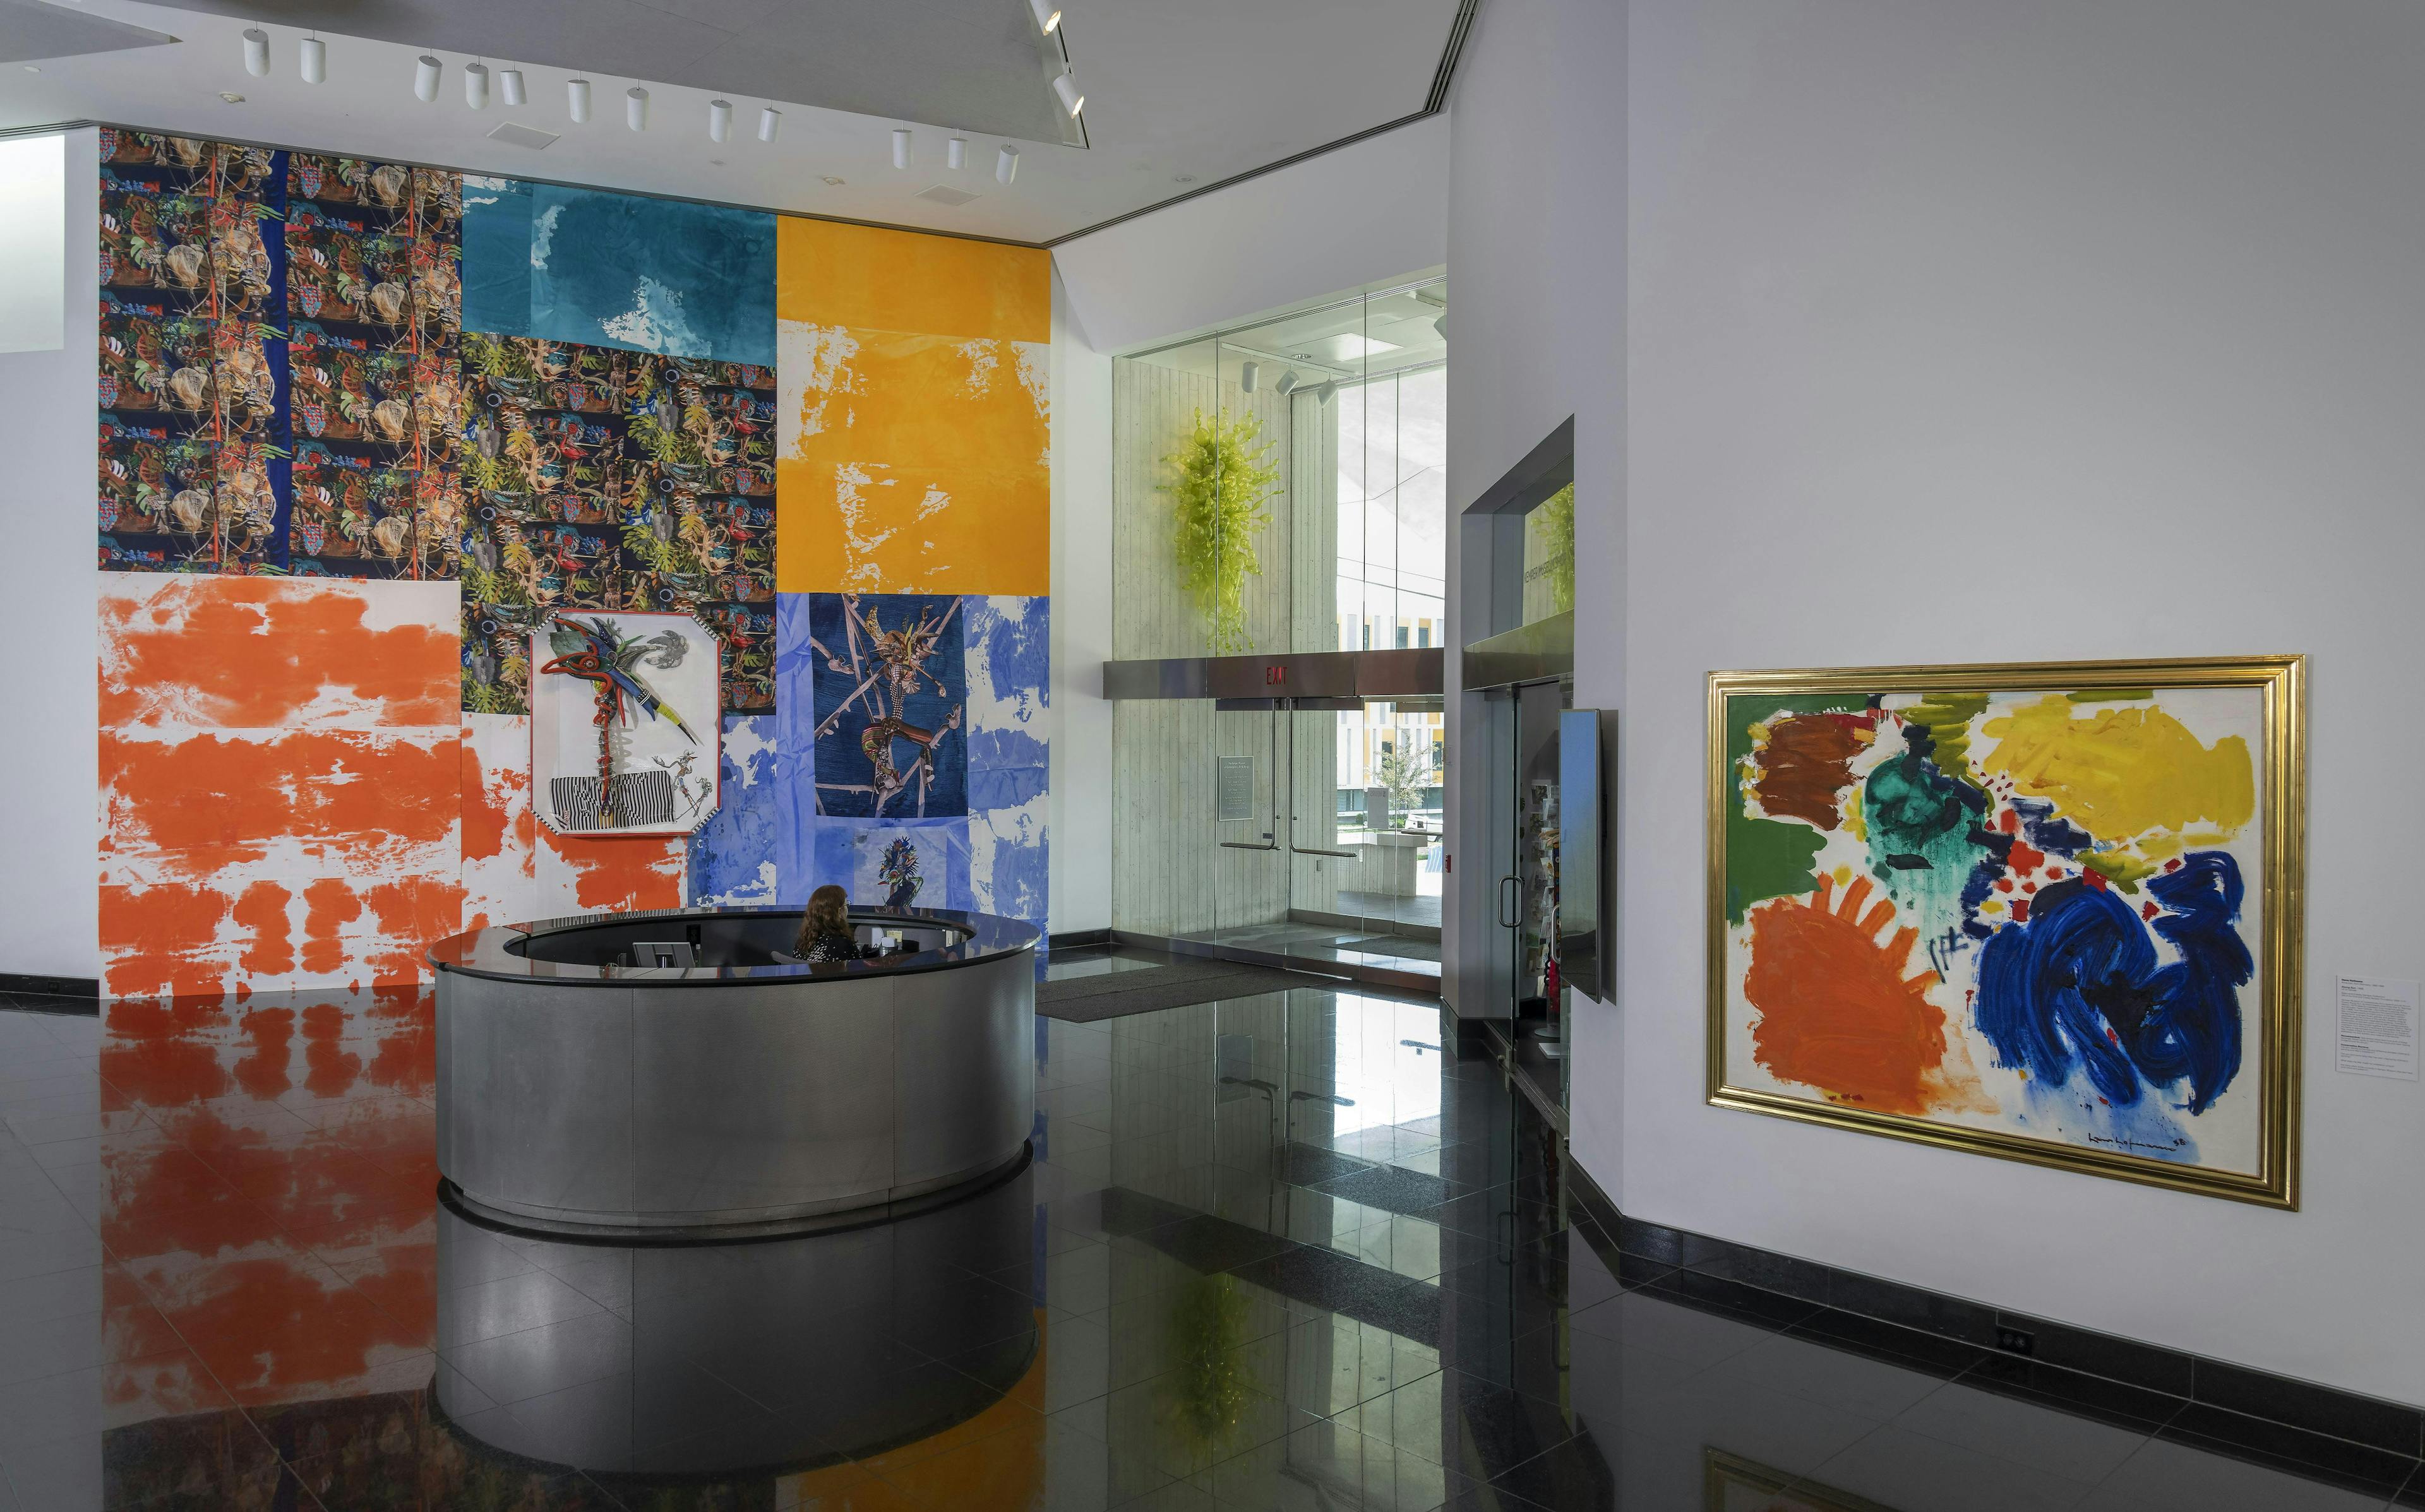 Image of Pepe Mar exhibit in gallery